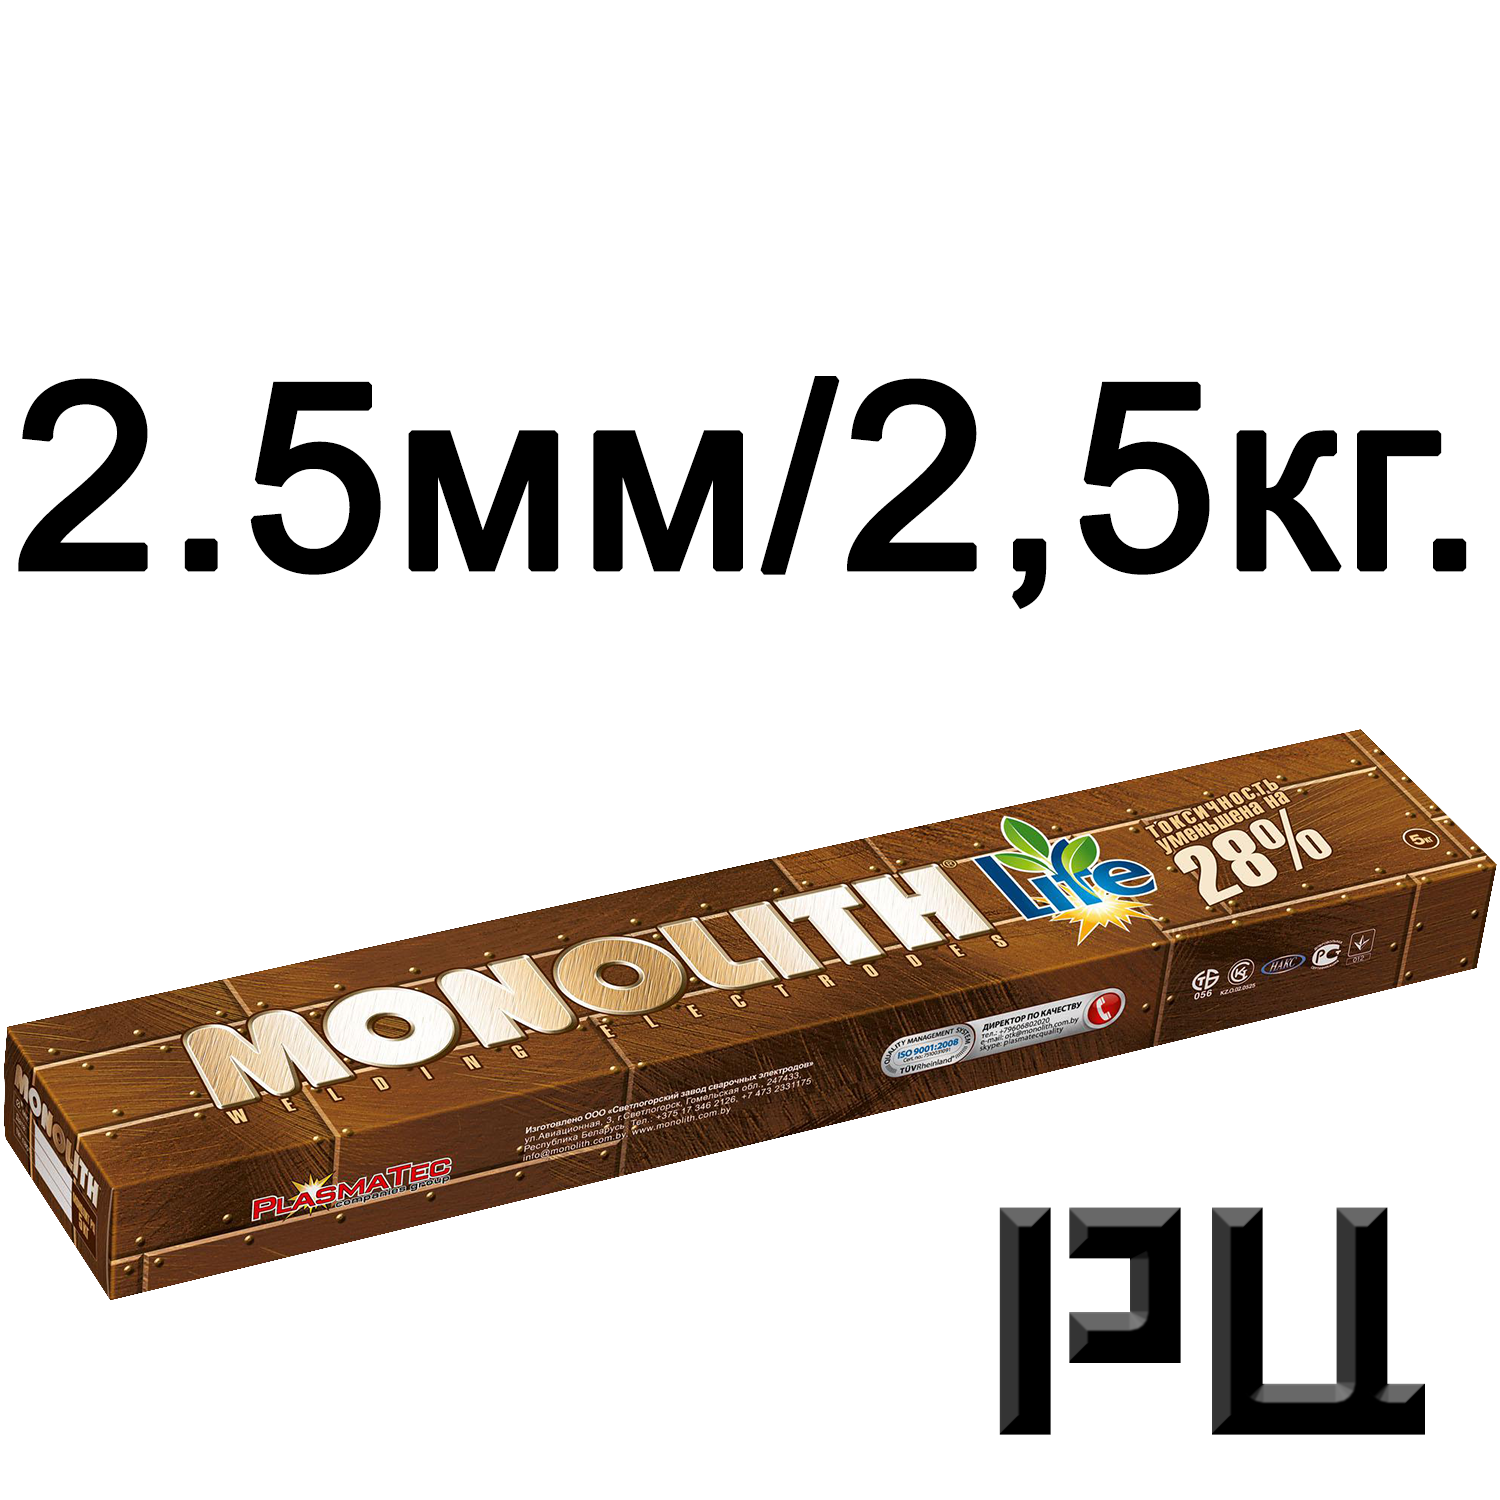 Электроды monolith. Электроды монолит РЦ 2.5 мм. Monolith Special электроды 2mm. Электрод 2,5мм Monolith (2,5кг в пачке).